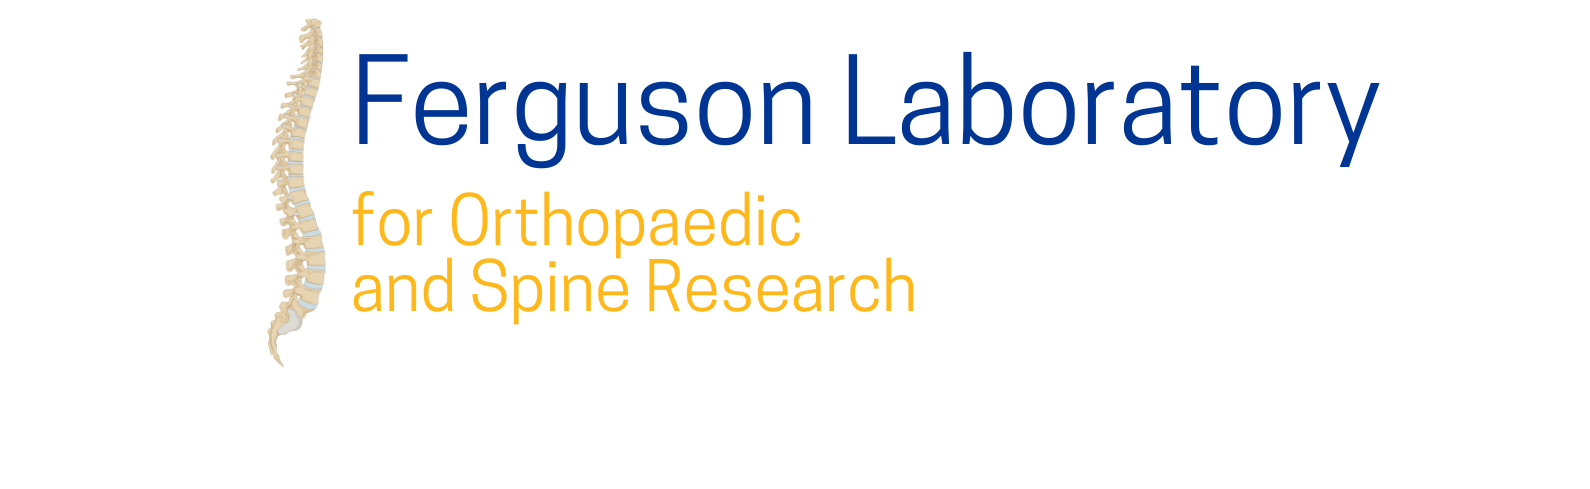 Ferguson Laboratory logo